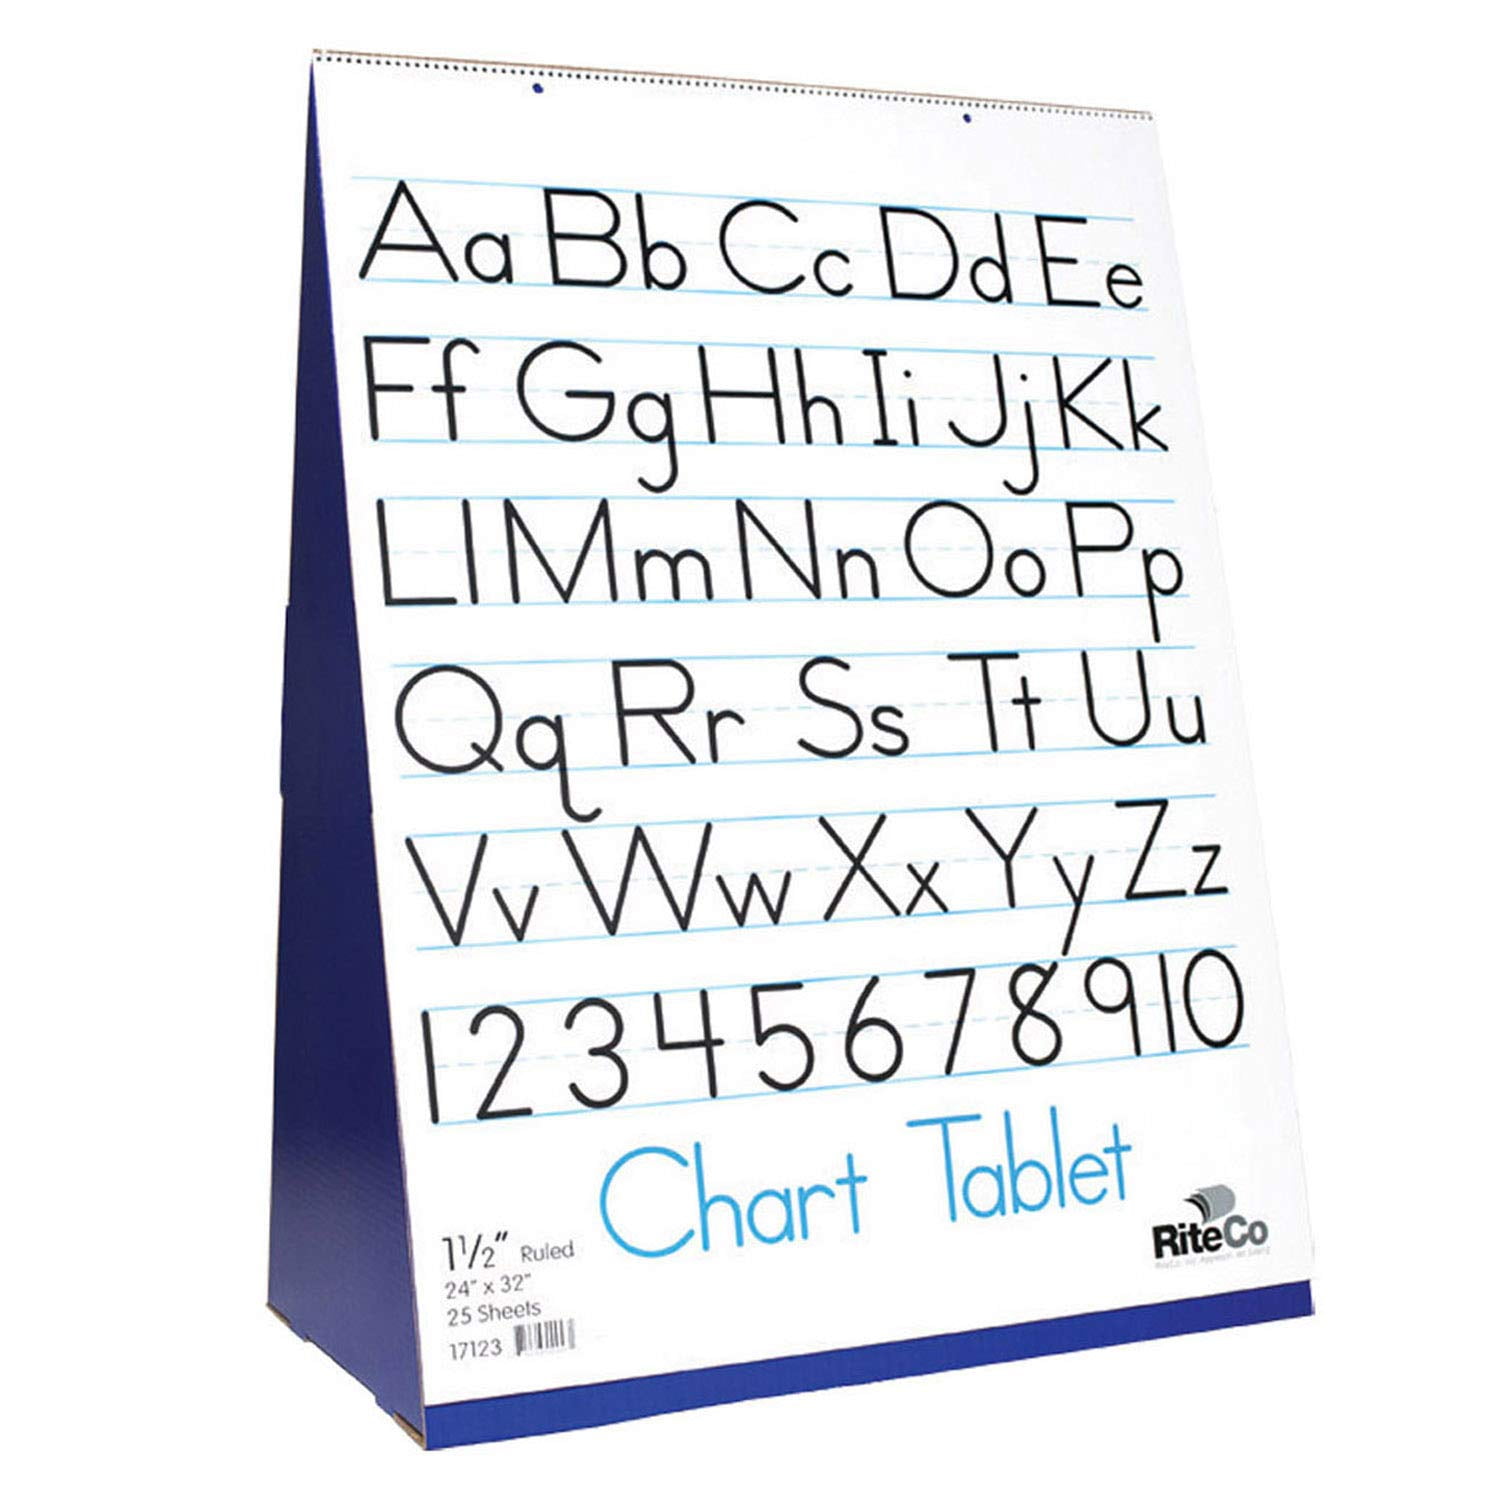 FLP30501 Spiral-Bound Flip Chart Stand with 1/2" Ruled Chart Tablet, Grade: 8 to Kindergarten By Flipside